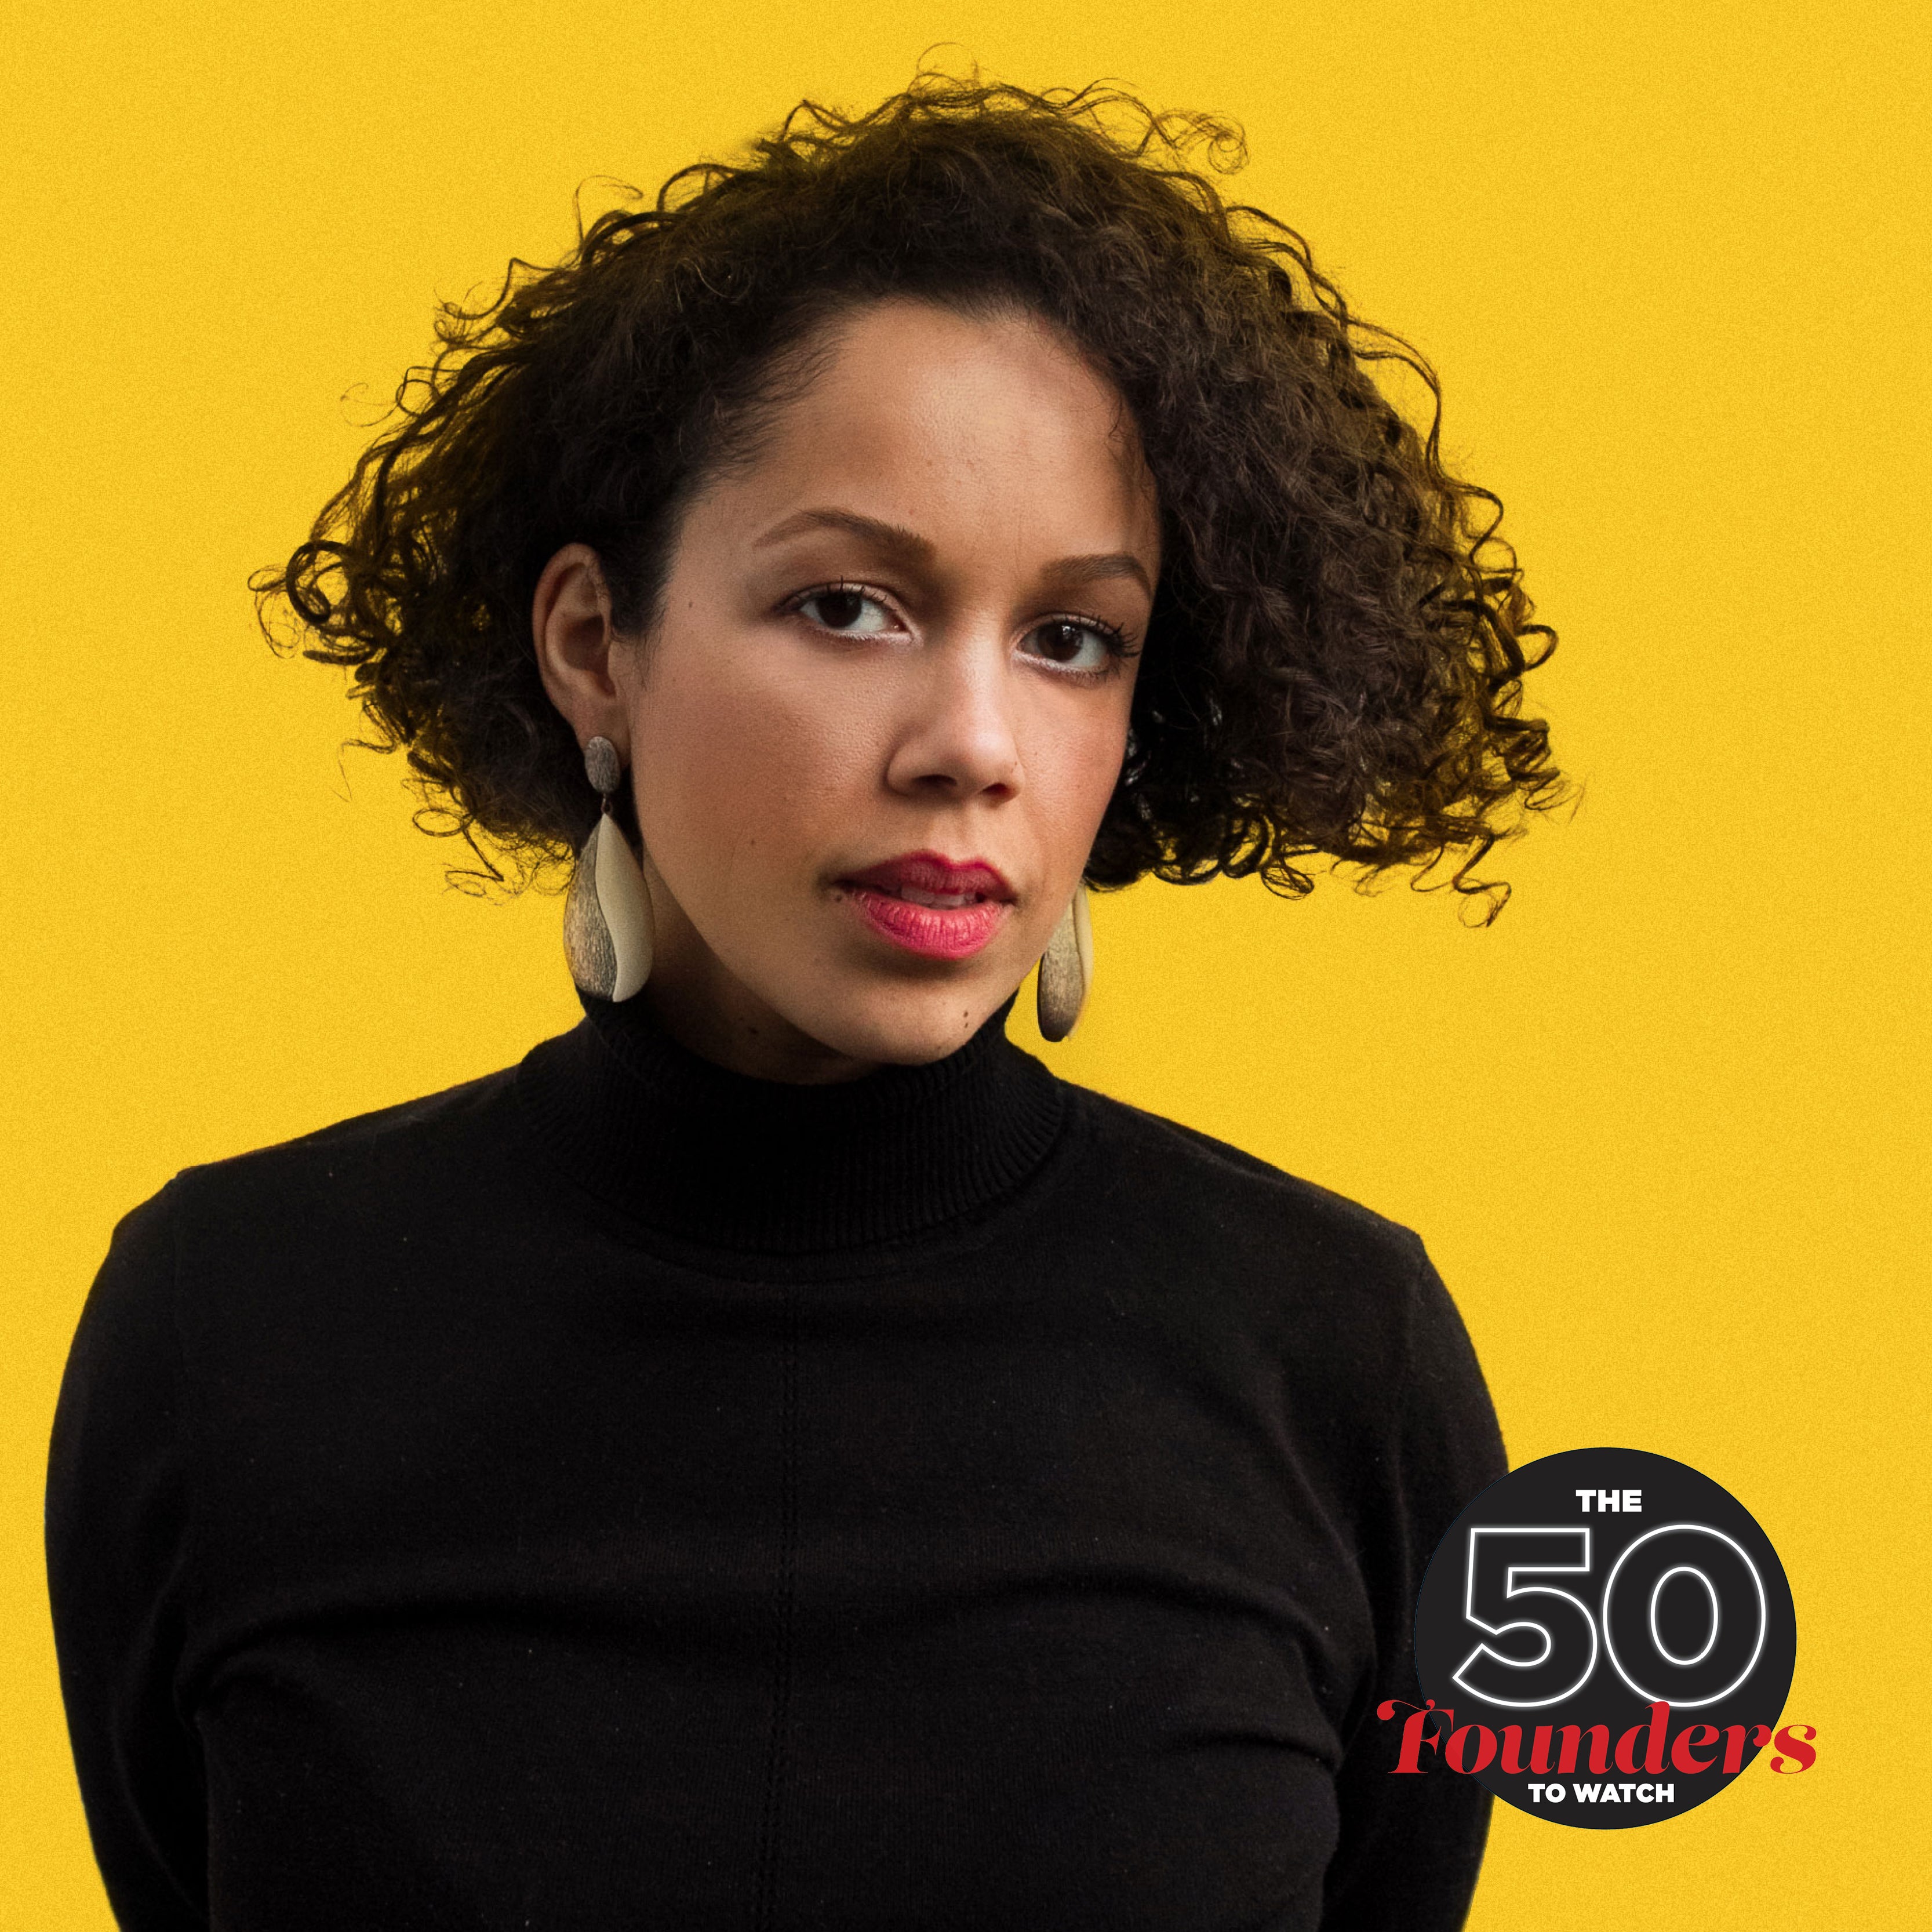 50 Black Women Founders To Watch